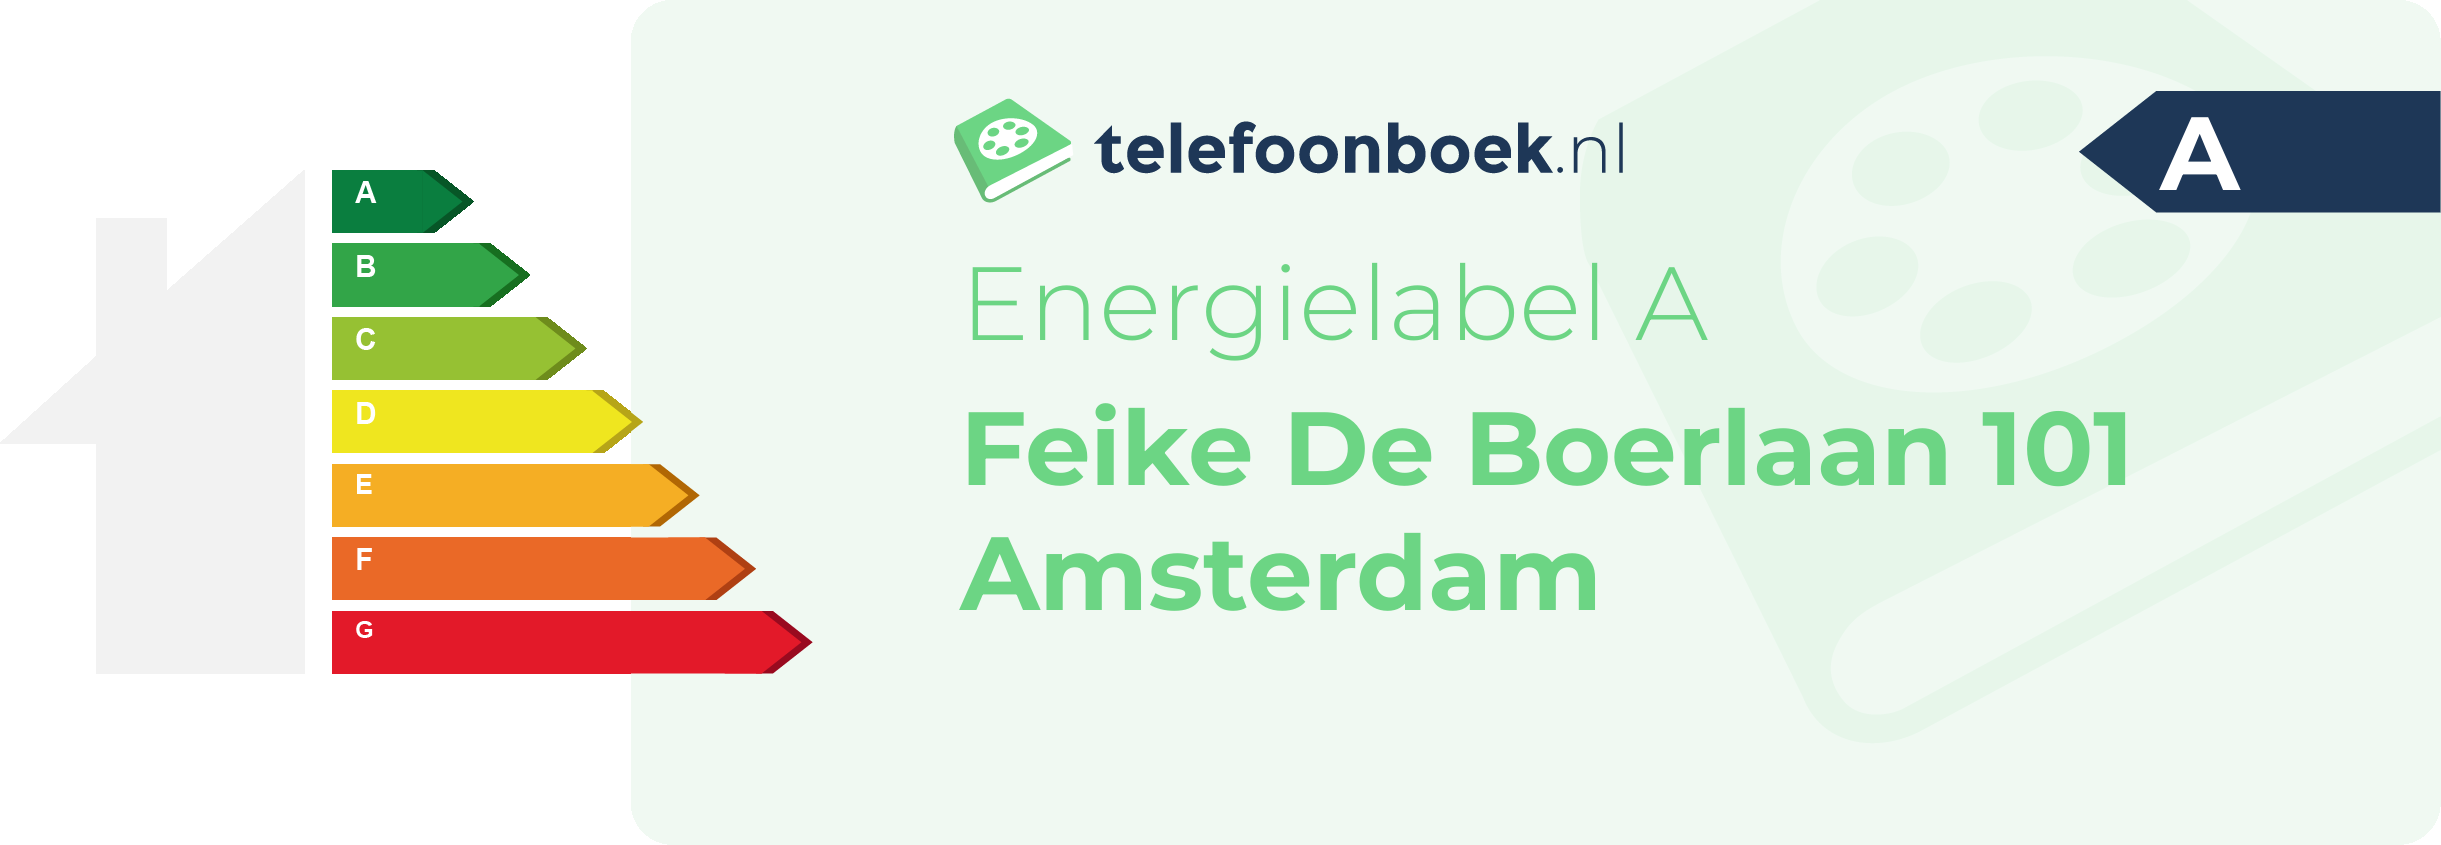 Energielabel Feike De Boerlaan 101 Amsterdam